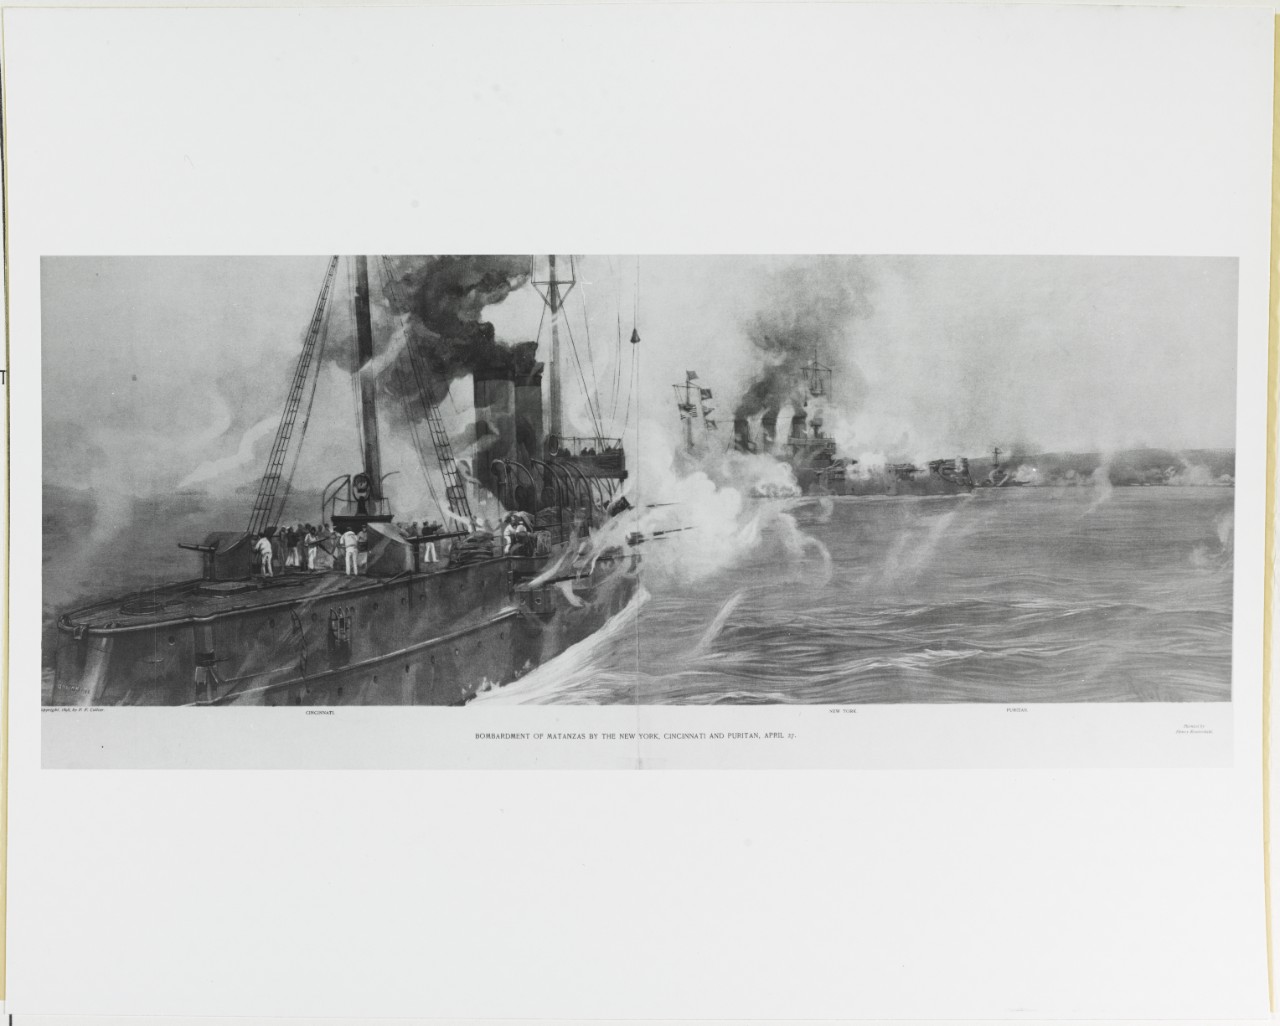 Bombardment of Matanzas